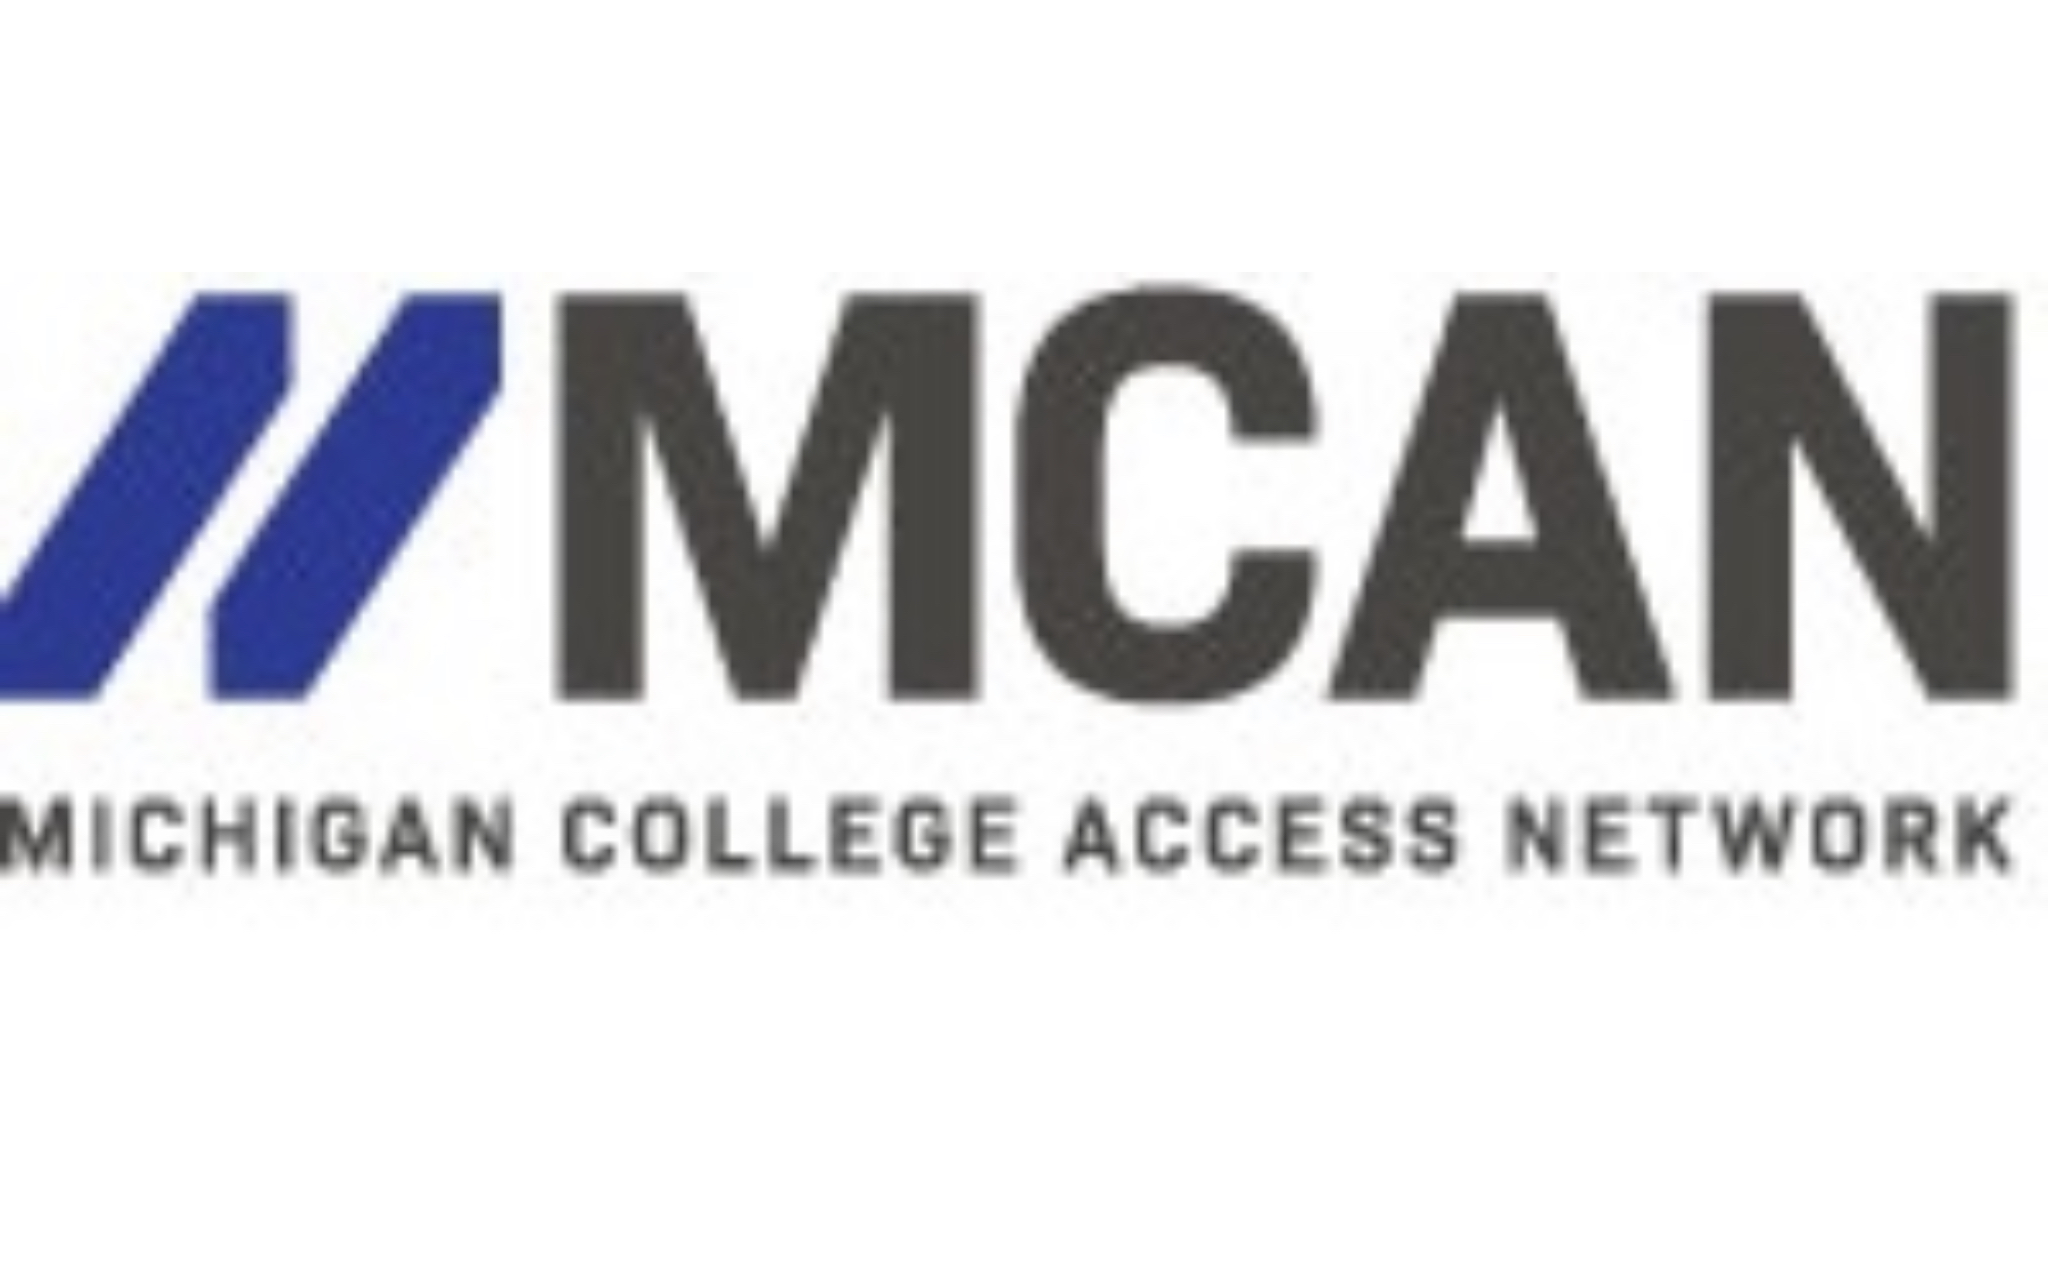 MCAN - Michigan College Access Network